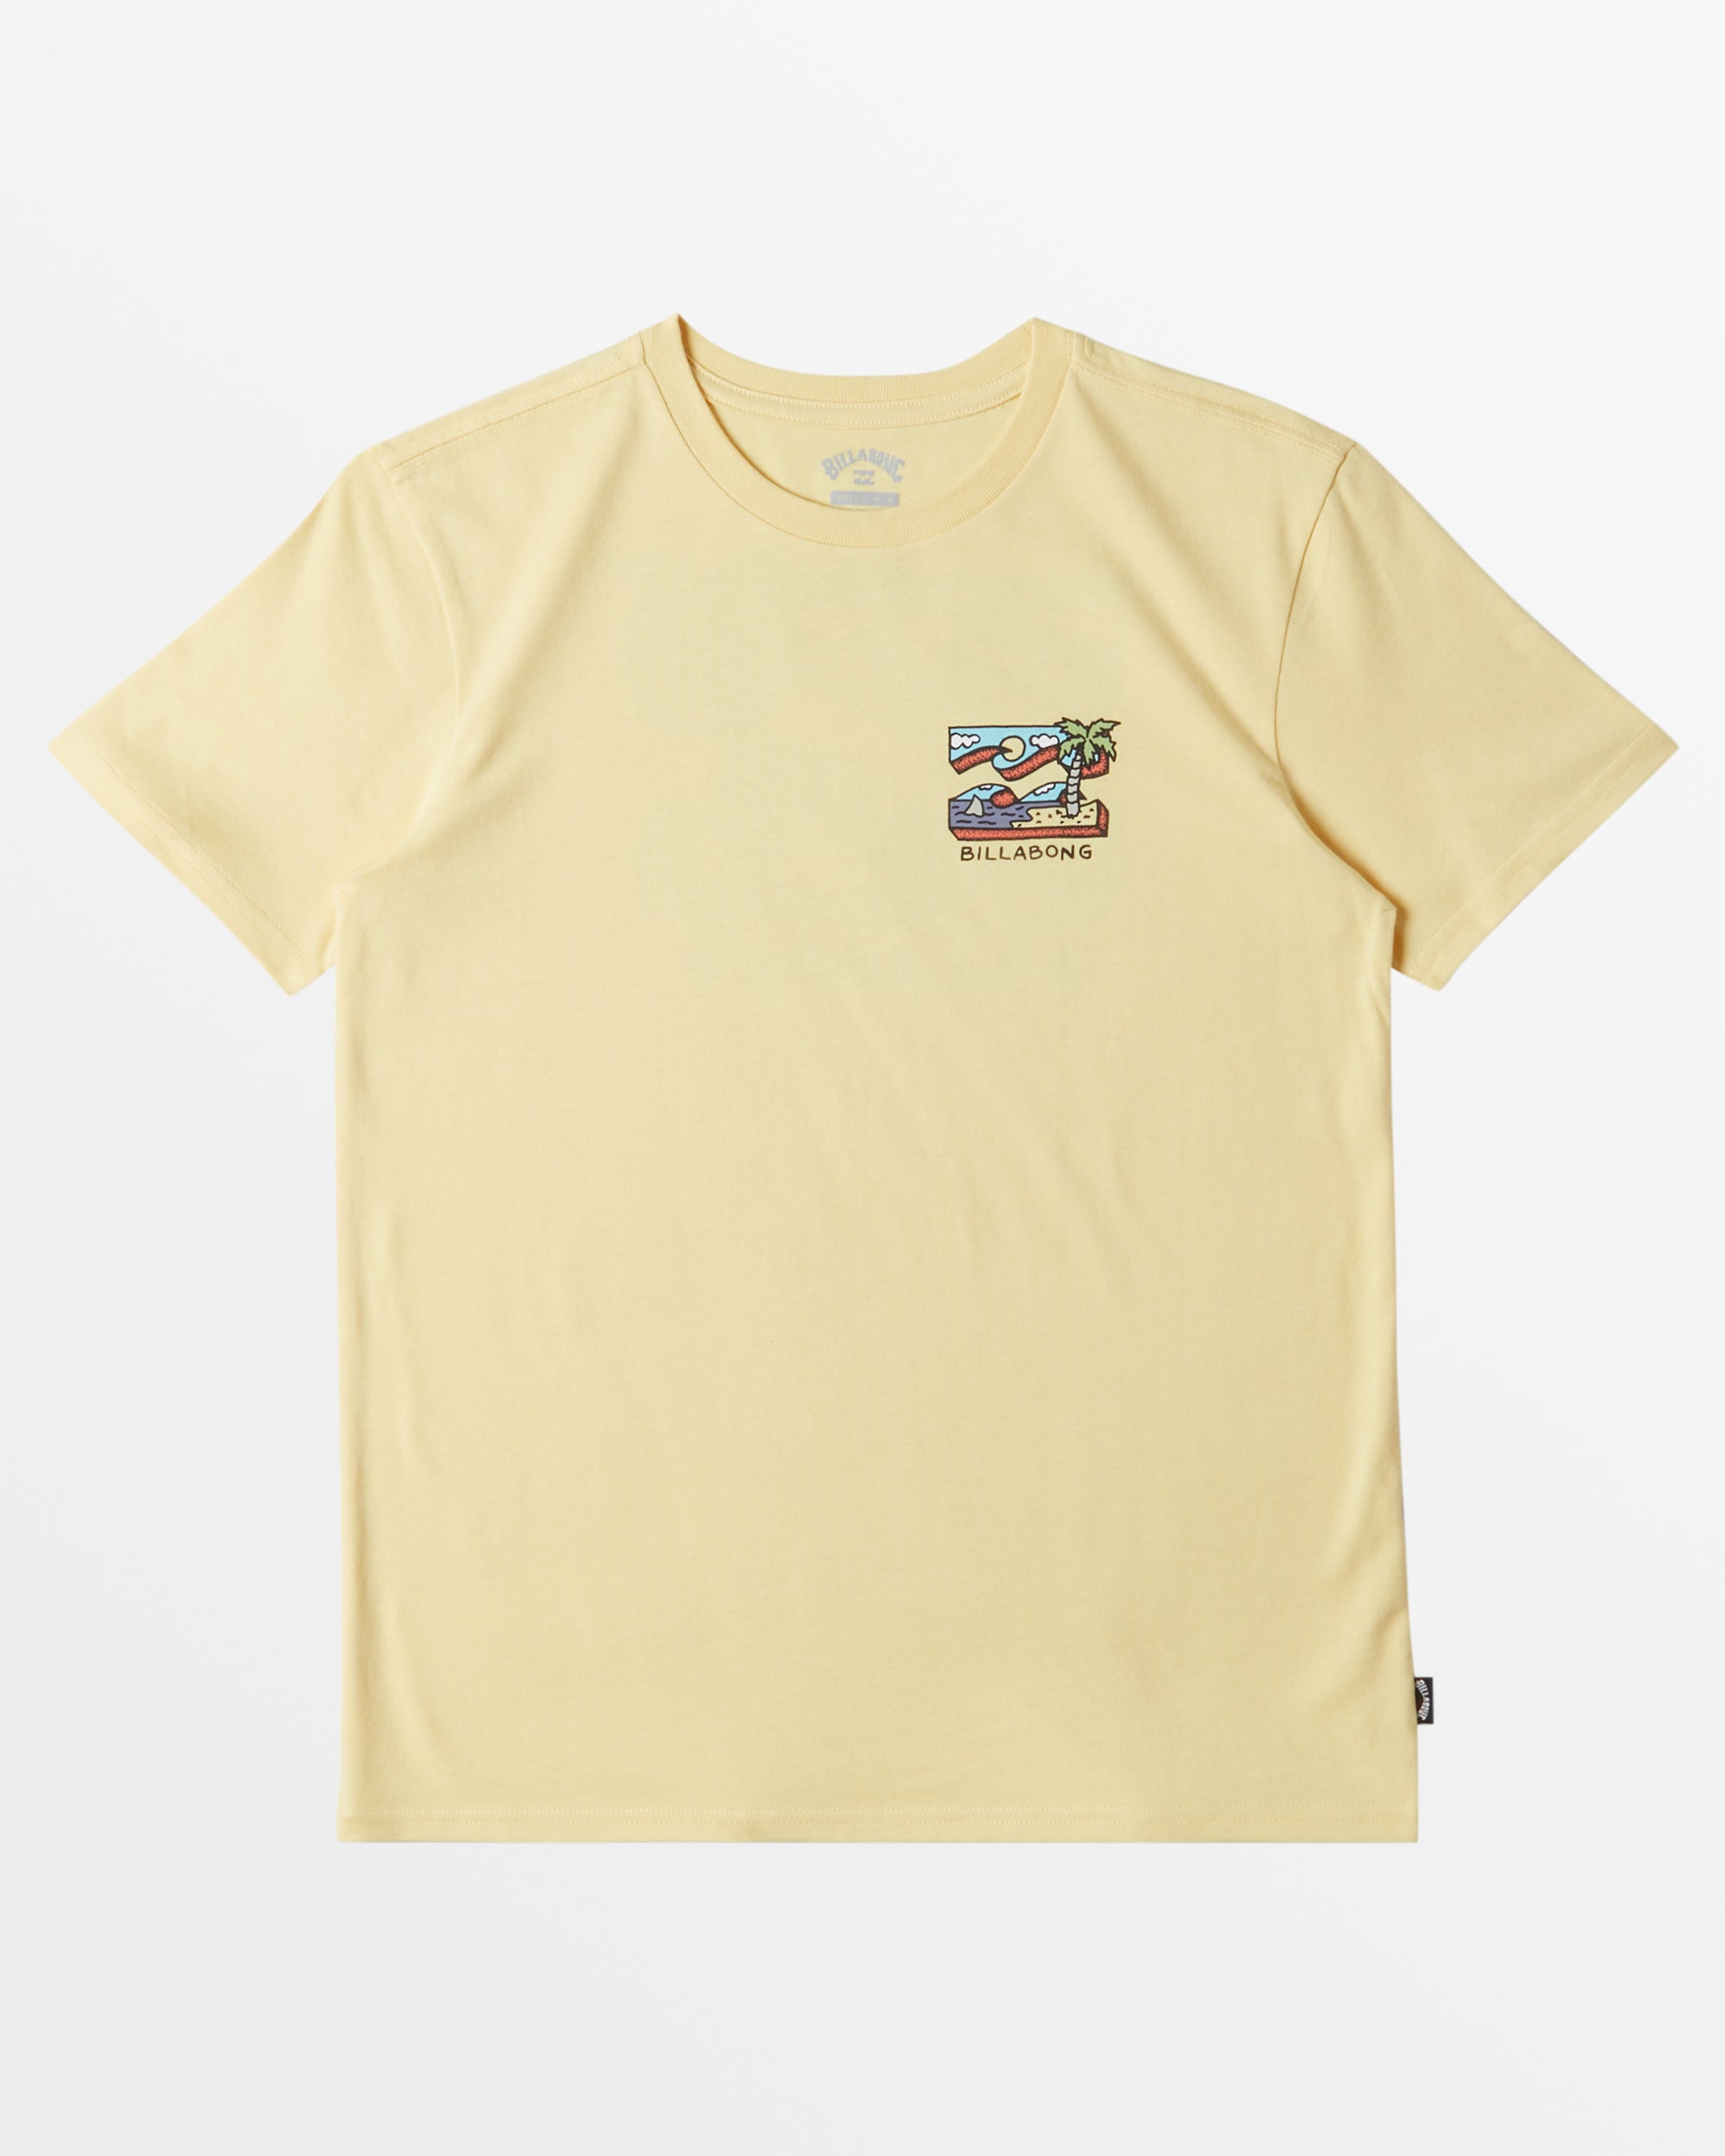 Toddler Boy's 2-7 BBTV T-Shirt - Dole Whip